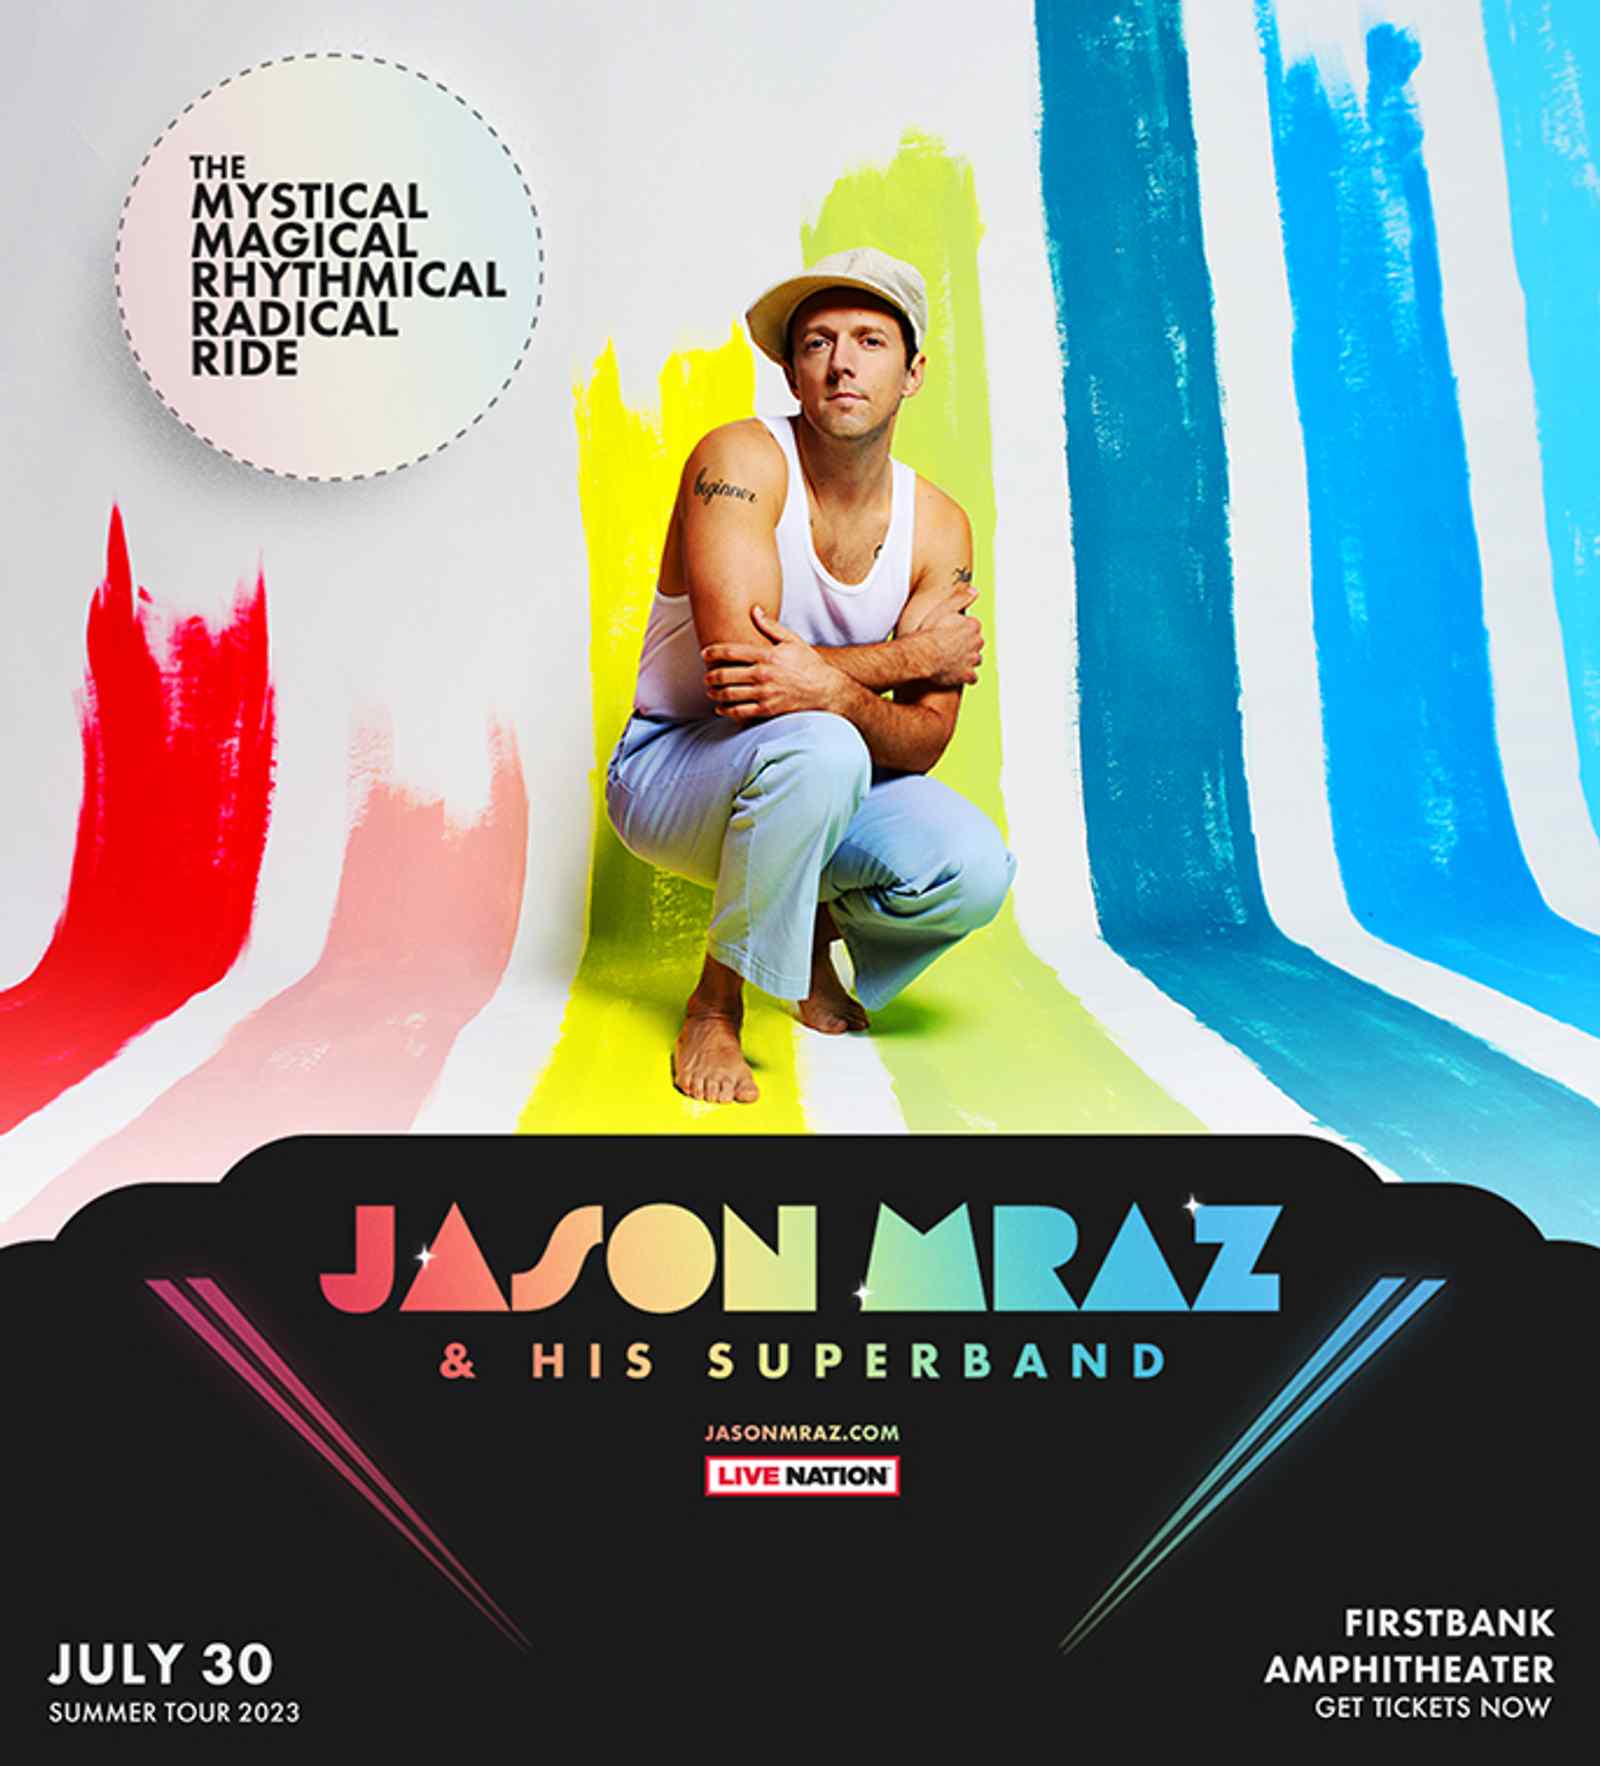 Jason Mraz and His Super Band The Mystical Magical Rhythmical Radical